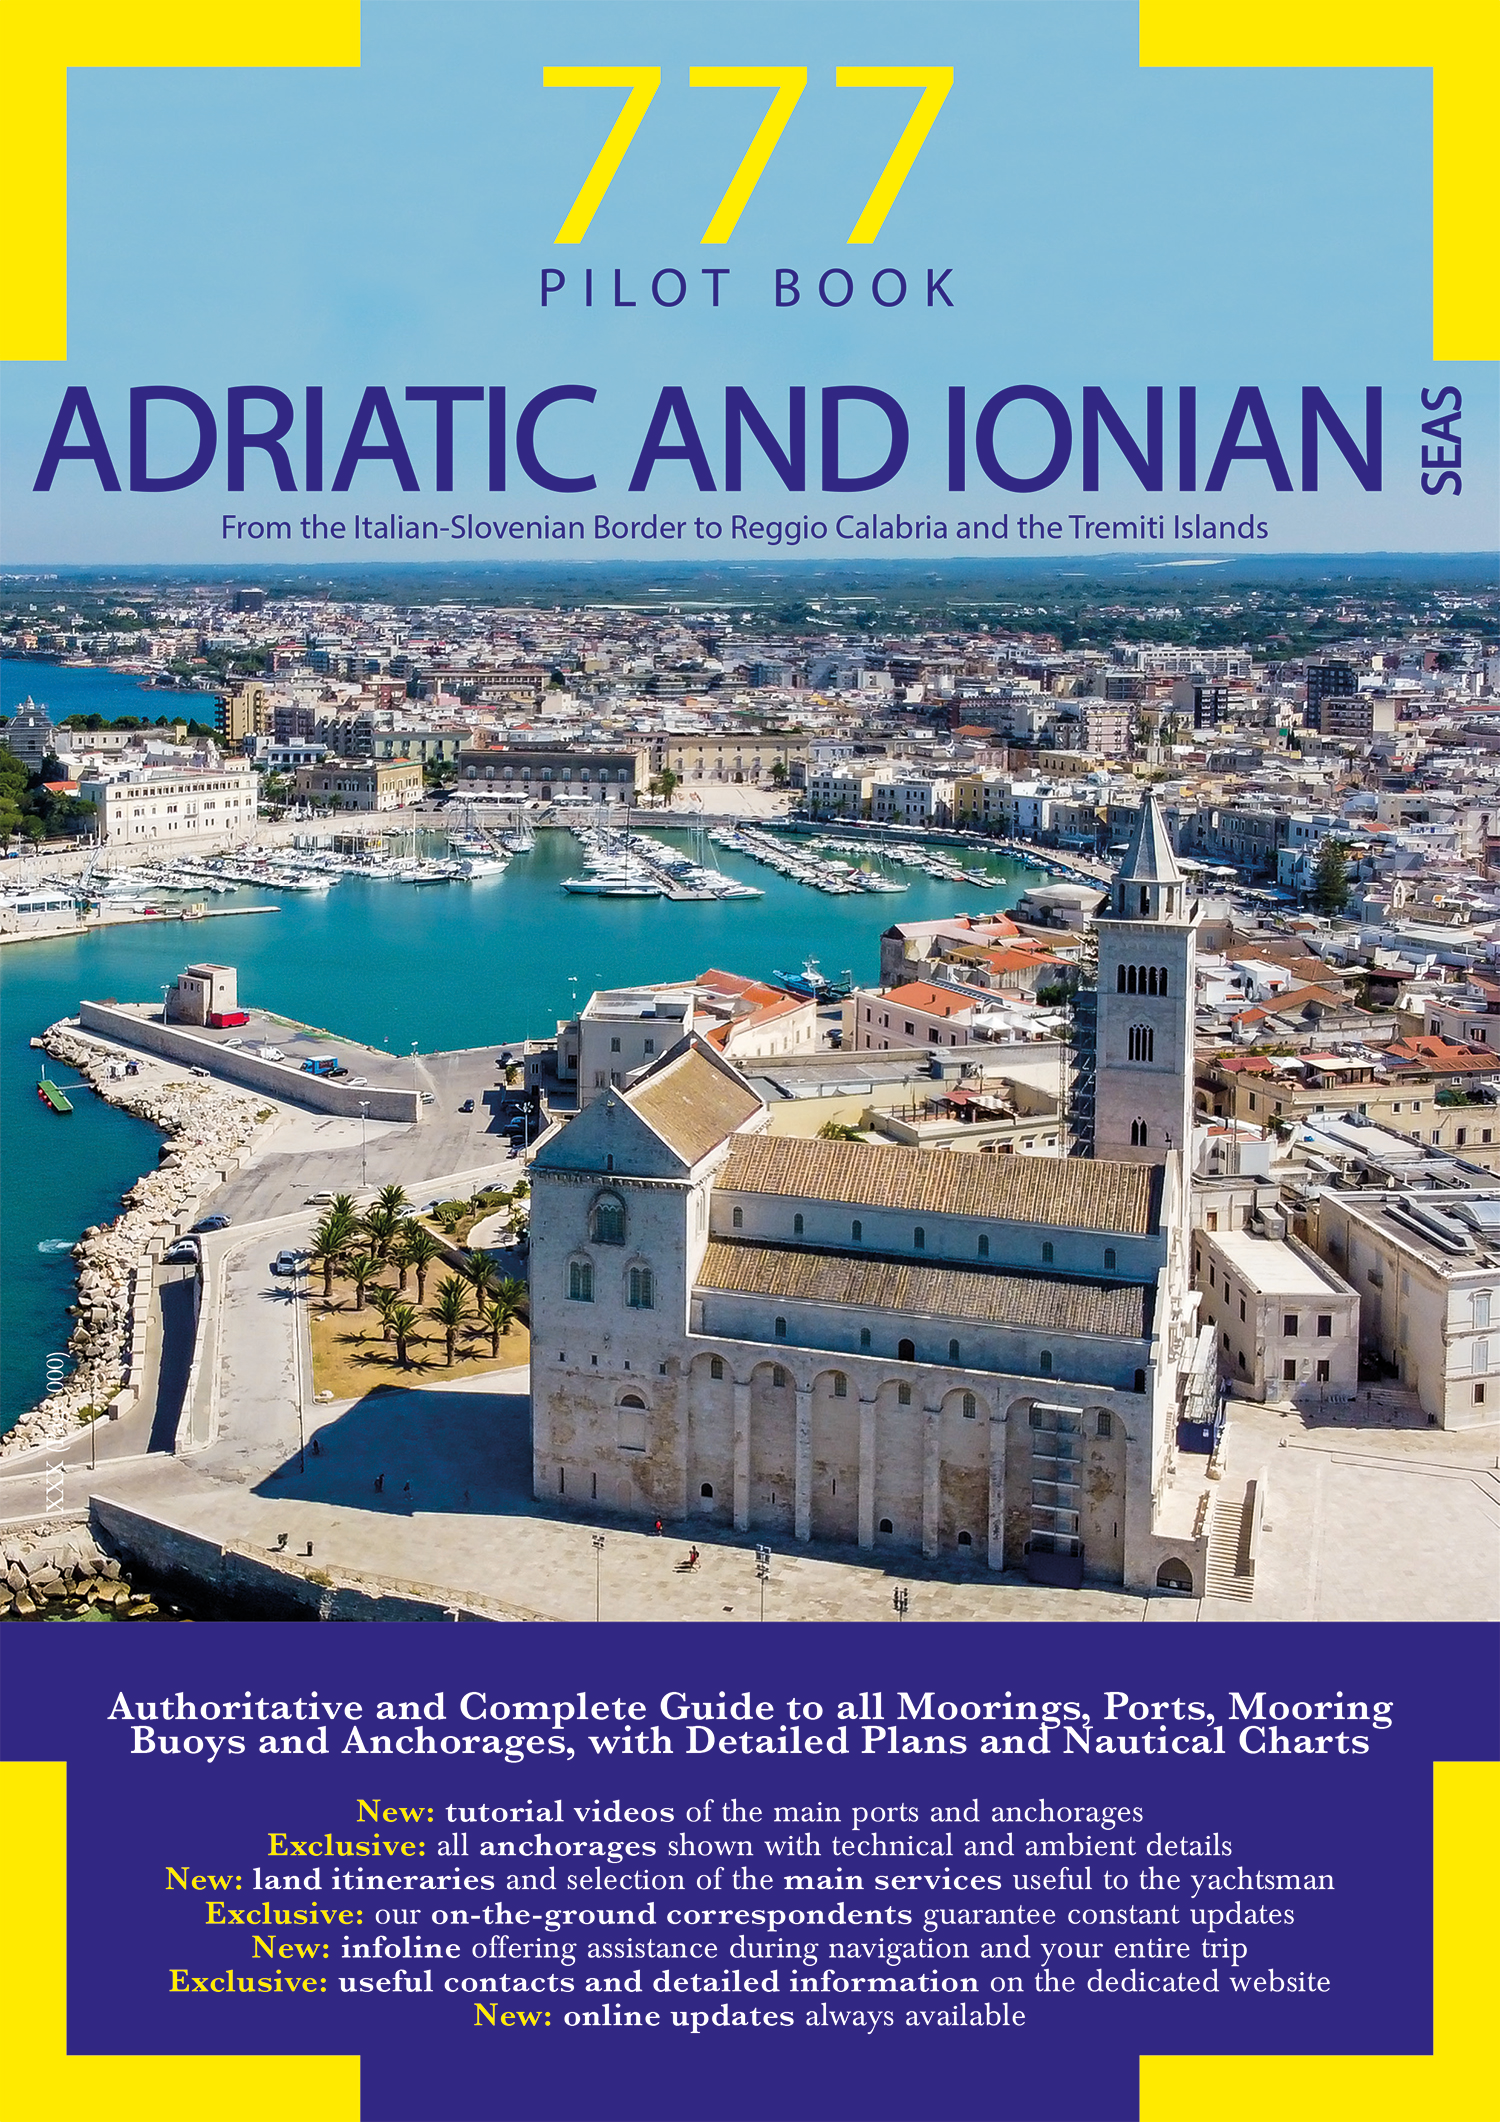 777 Pilot book Adriatic and Ionian Seas